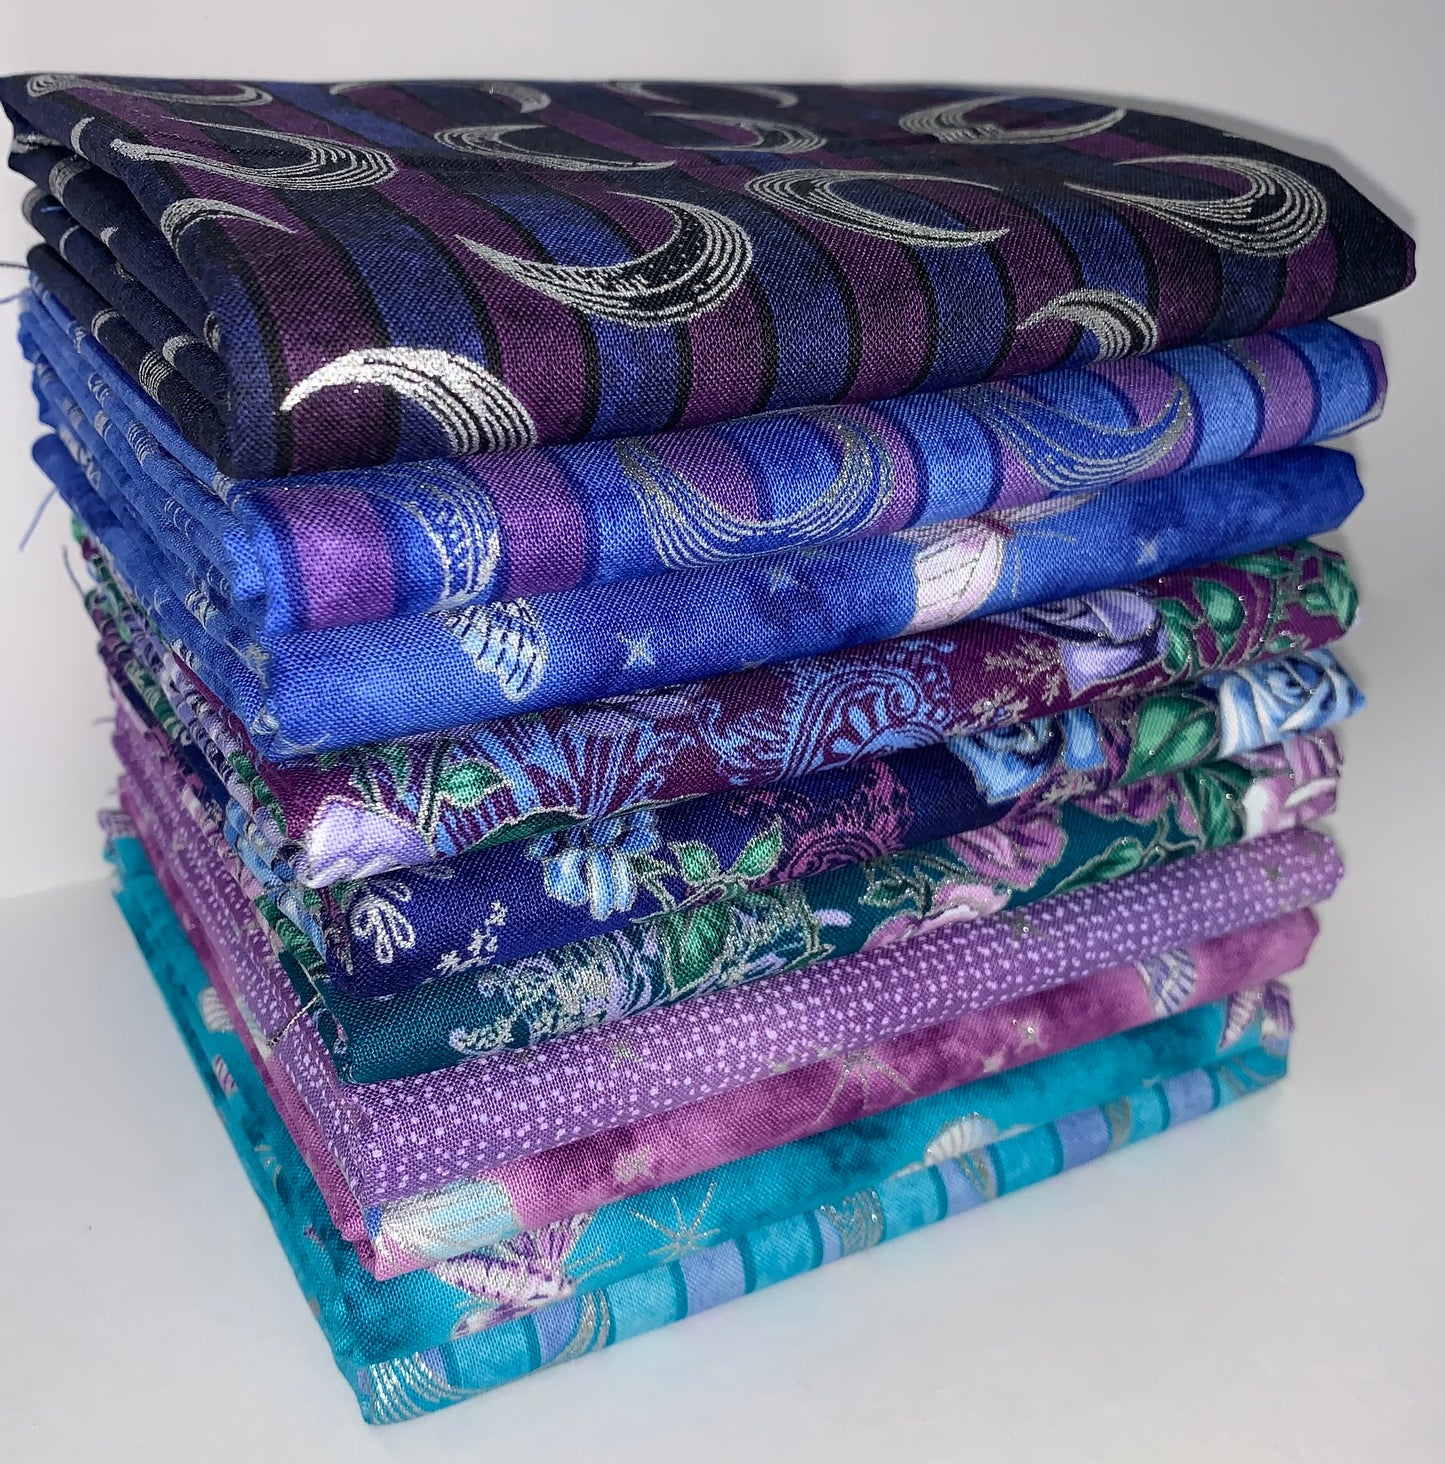 Robert Kaufman "Mystic Moon" Half-Yard Bundle - 10 Fabrics, 5 Total Yards